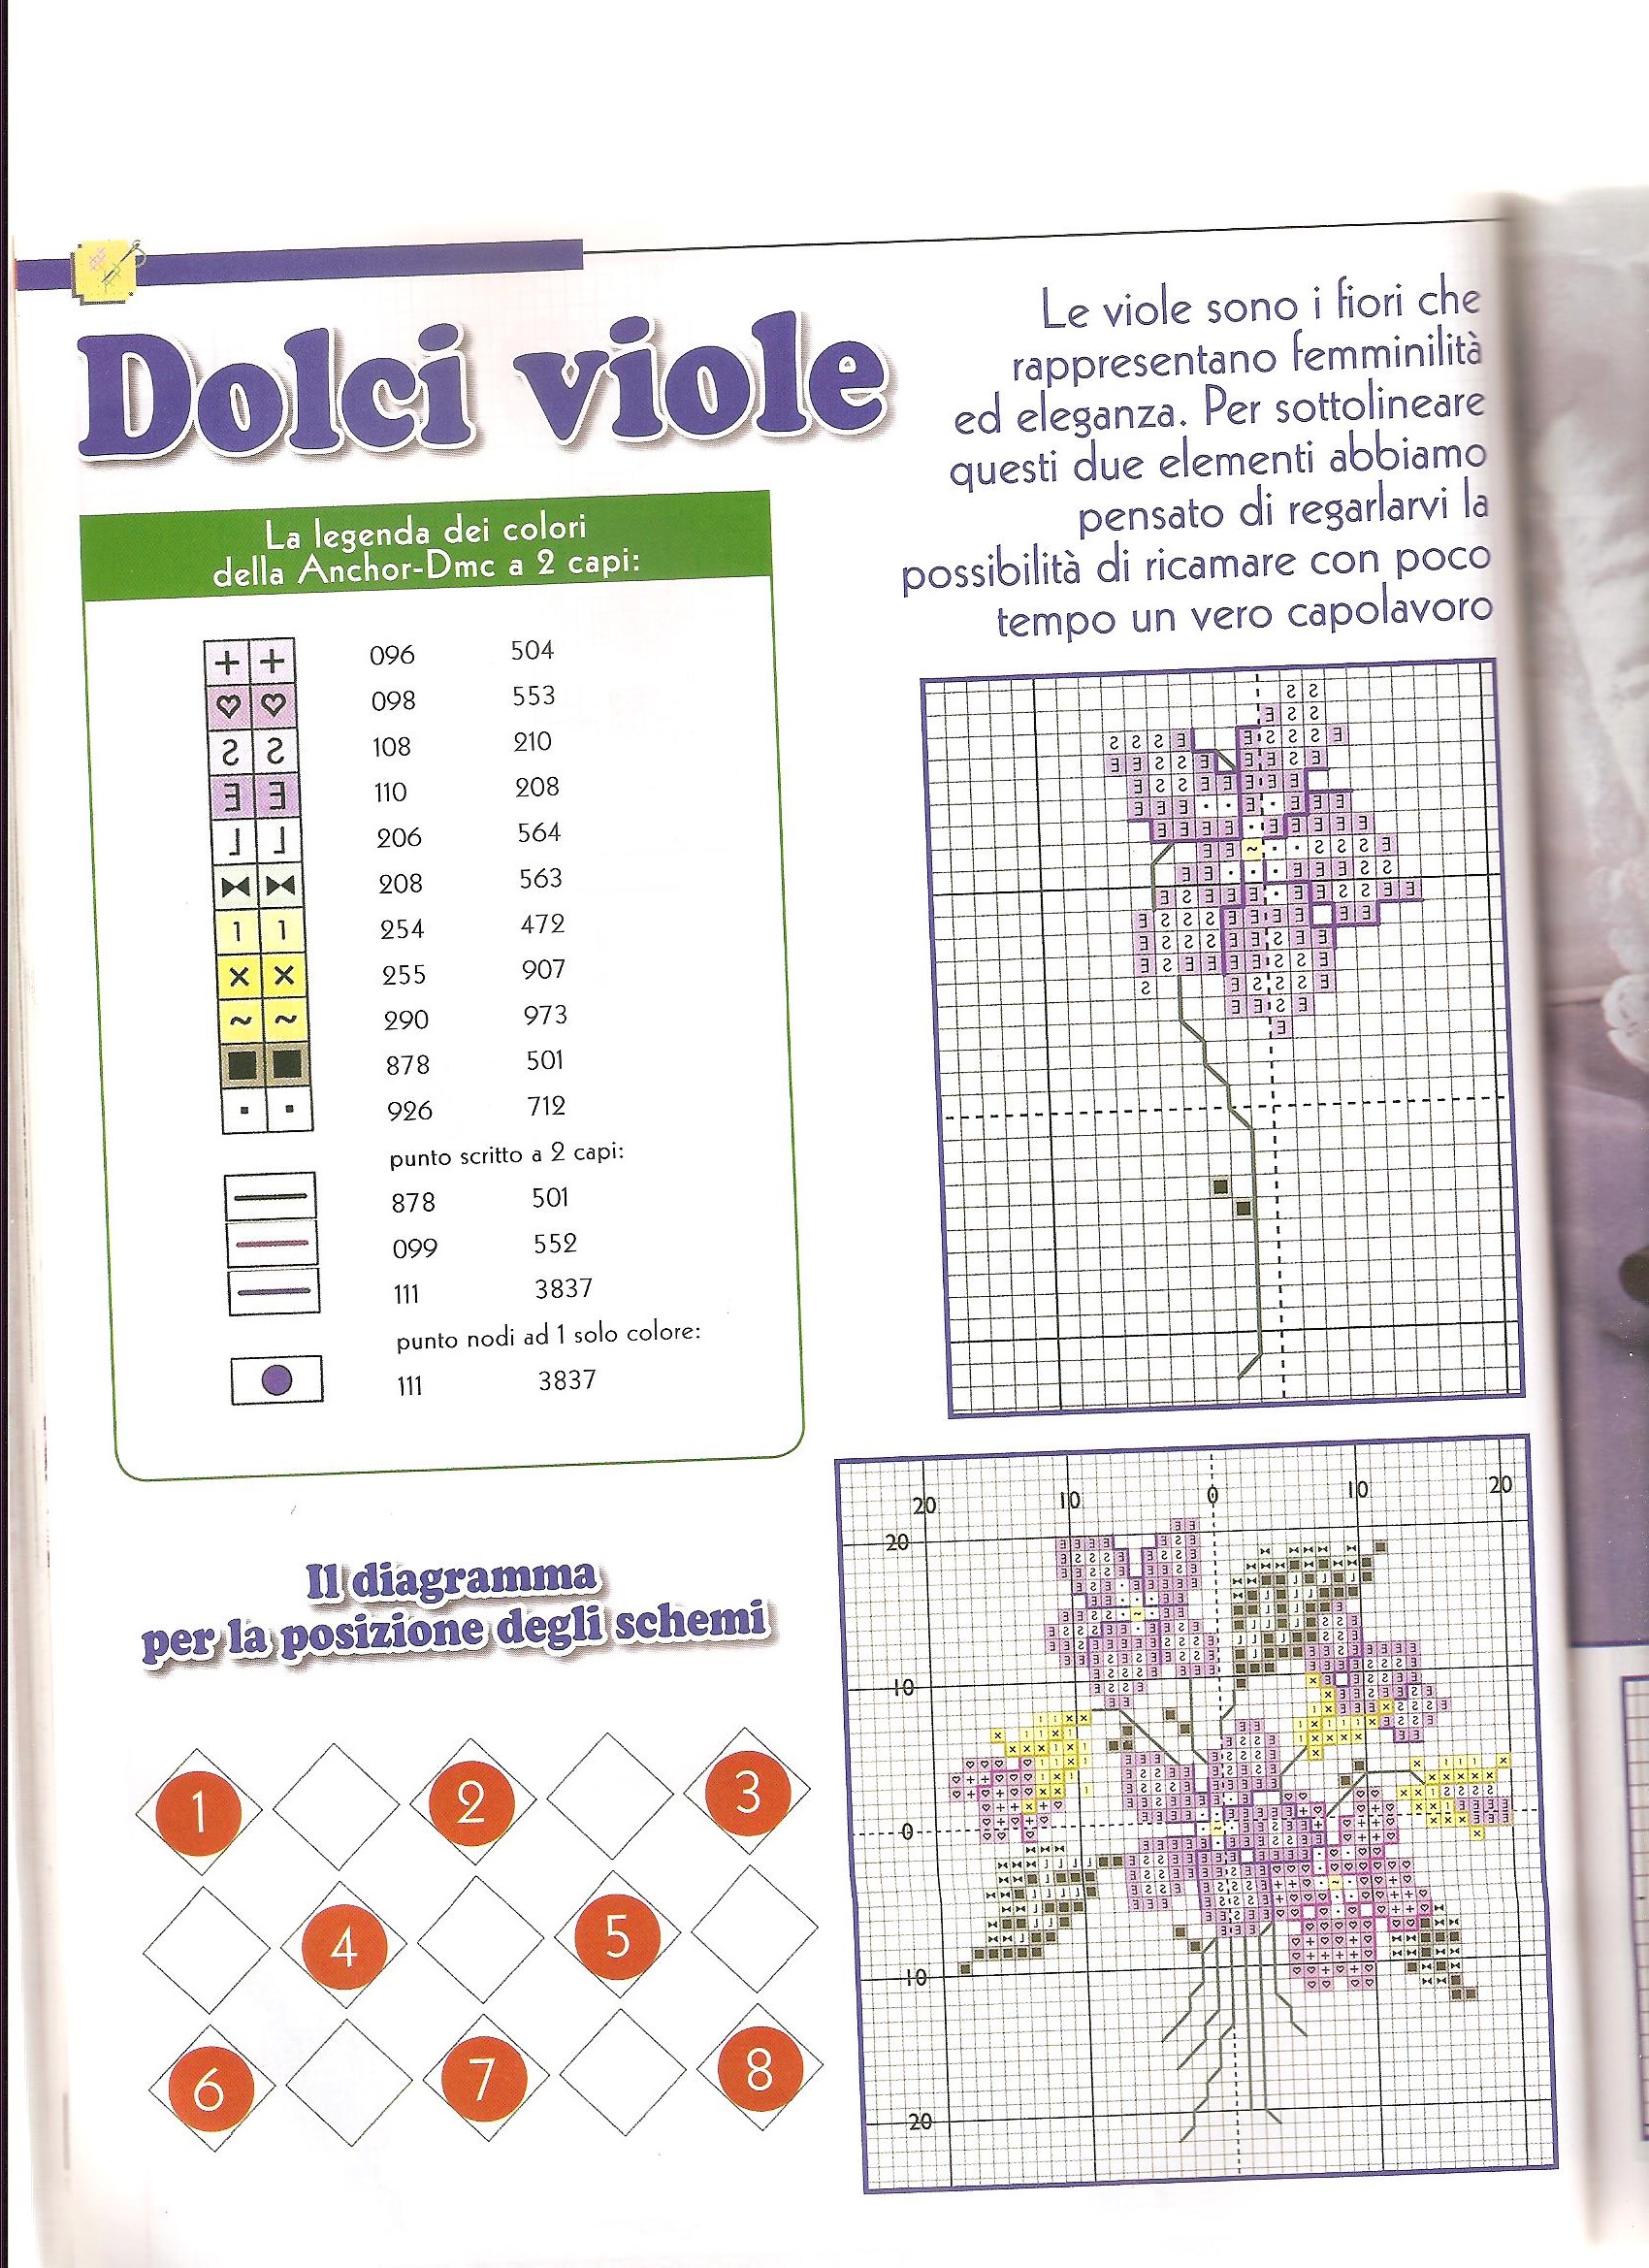 Sweet violets cross stitch pattern (1)